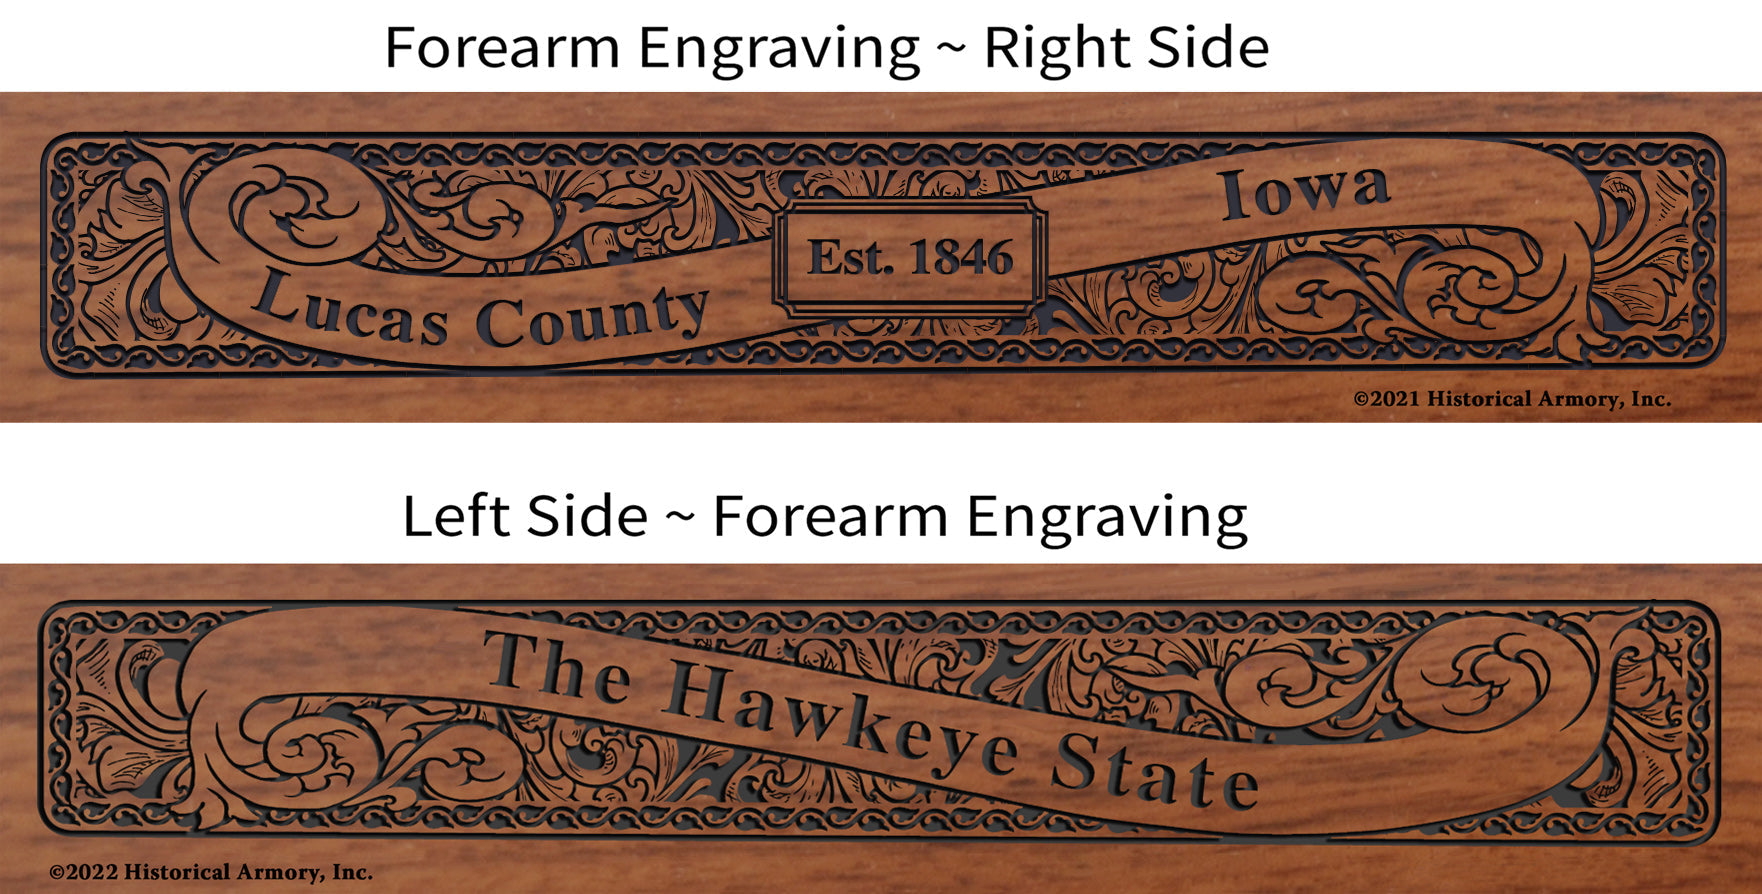 Lucas County Iowa Engraved Rifle Forearm